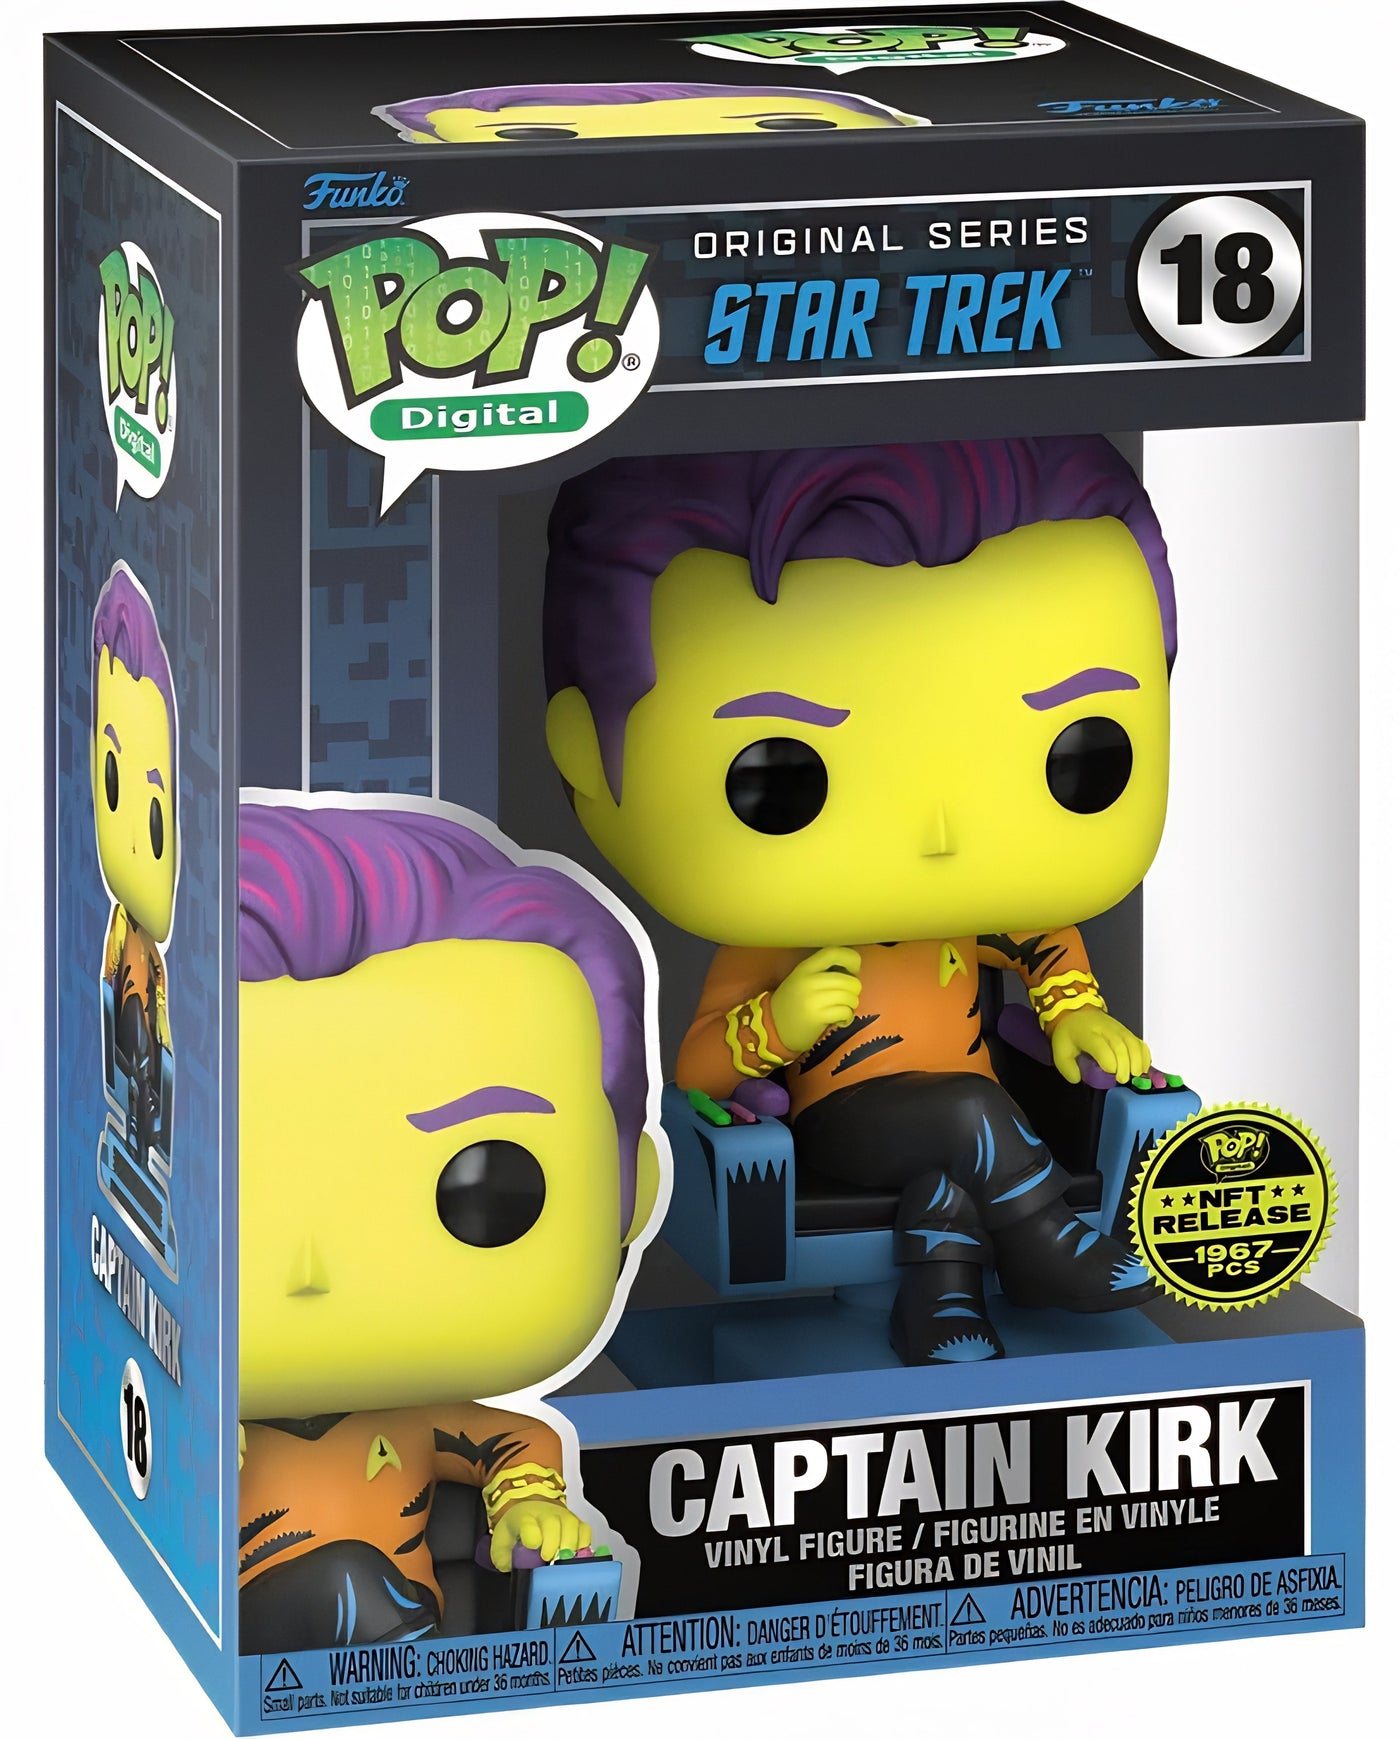 POP! Digital 18 Star Trek, Captain Kirk (1,967 PCS) Exclusive